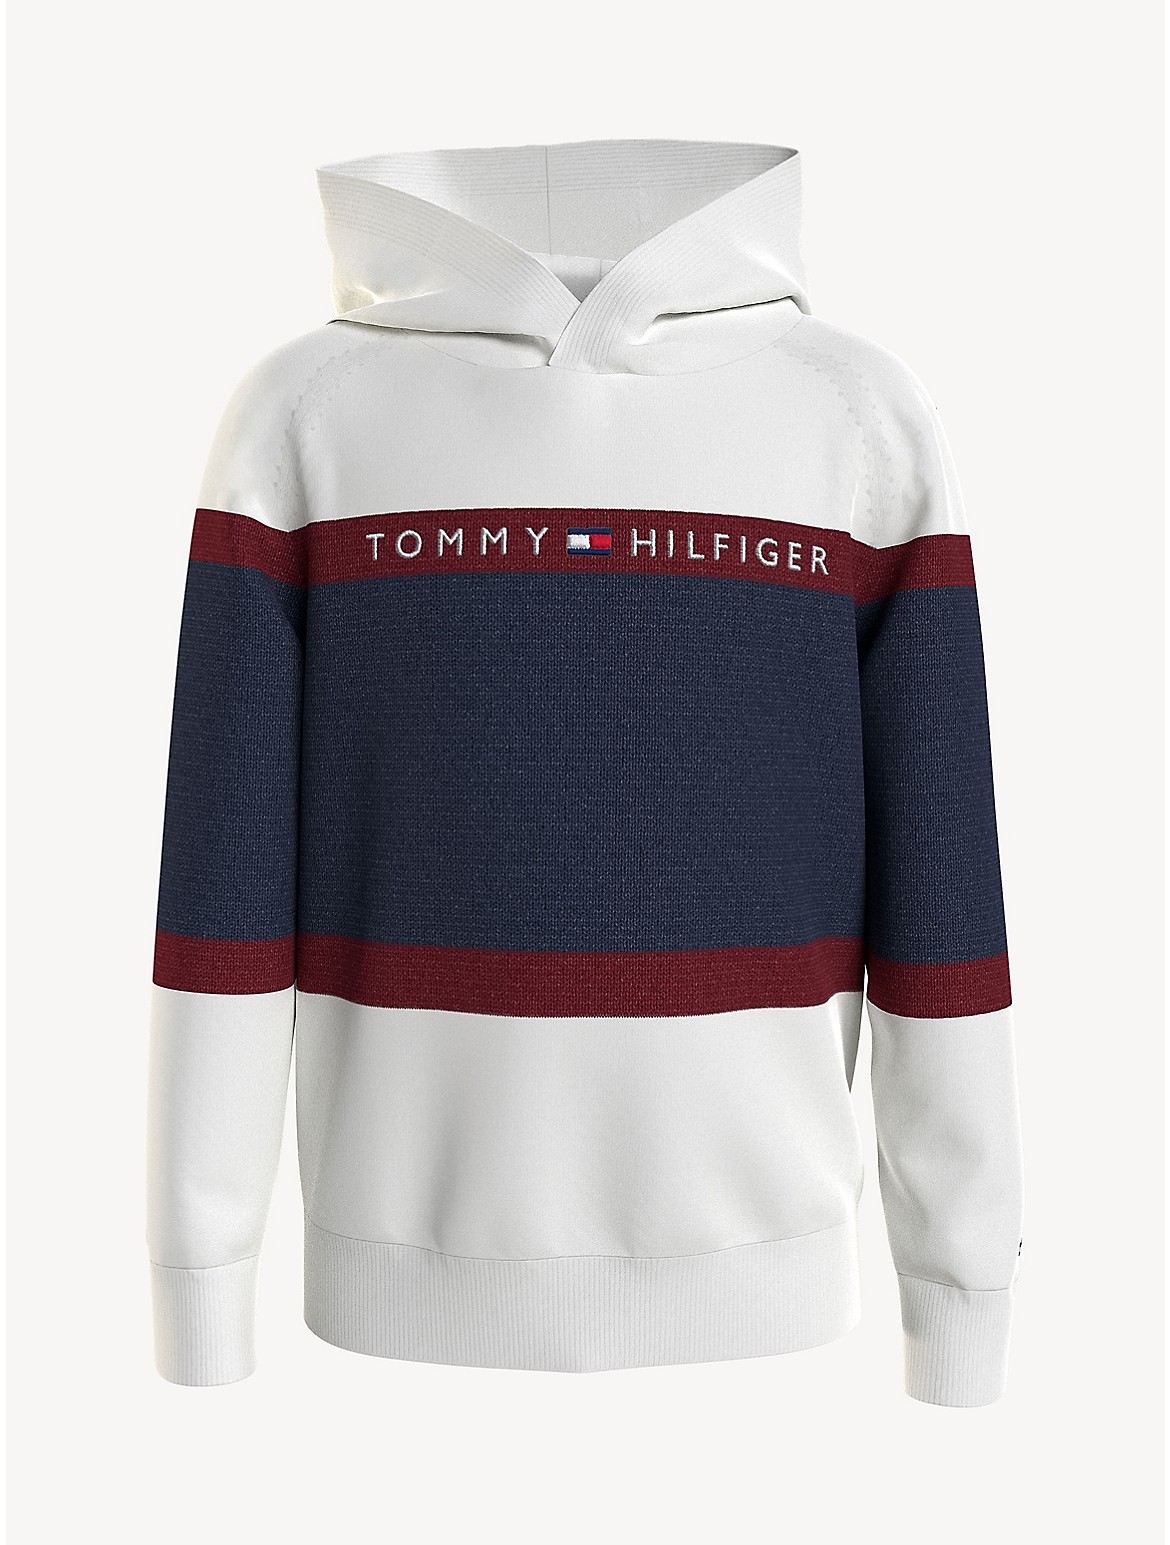 Tommy Hilfiger Boys' Kids' Colorblock Hooded Sweater - Multi - XXS